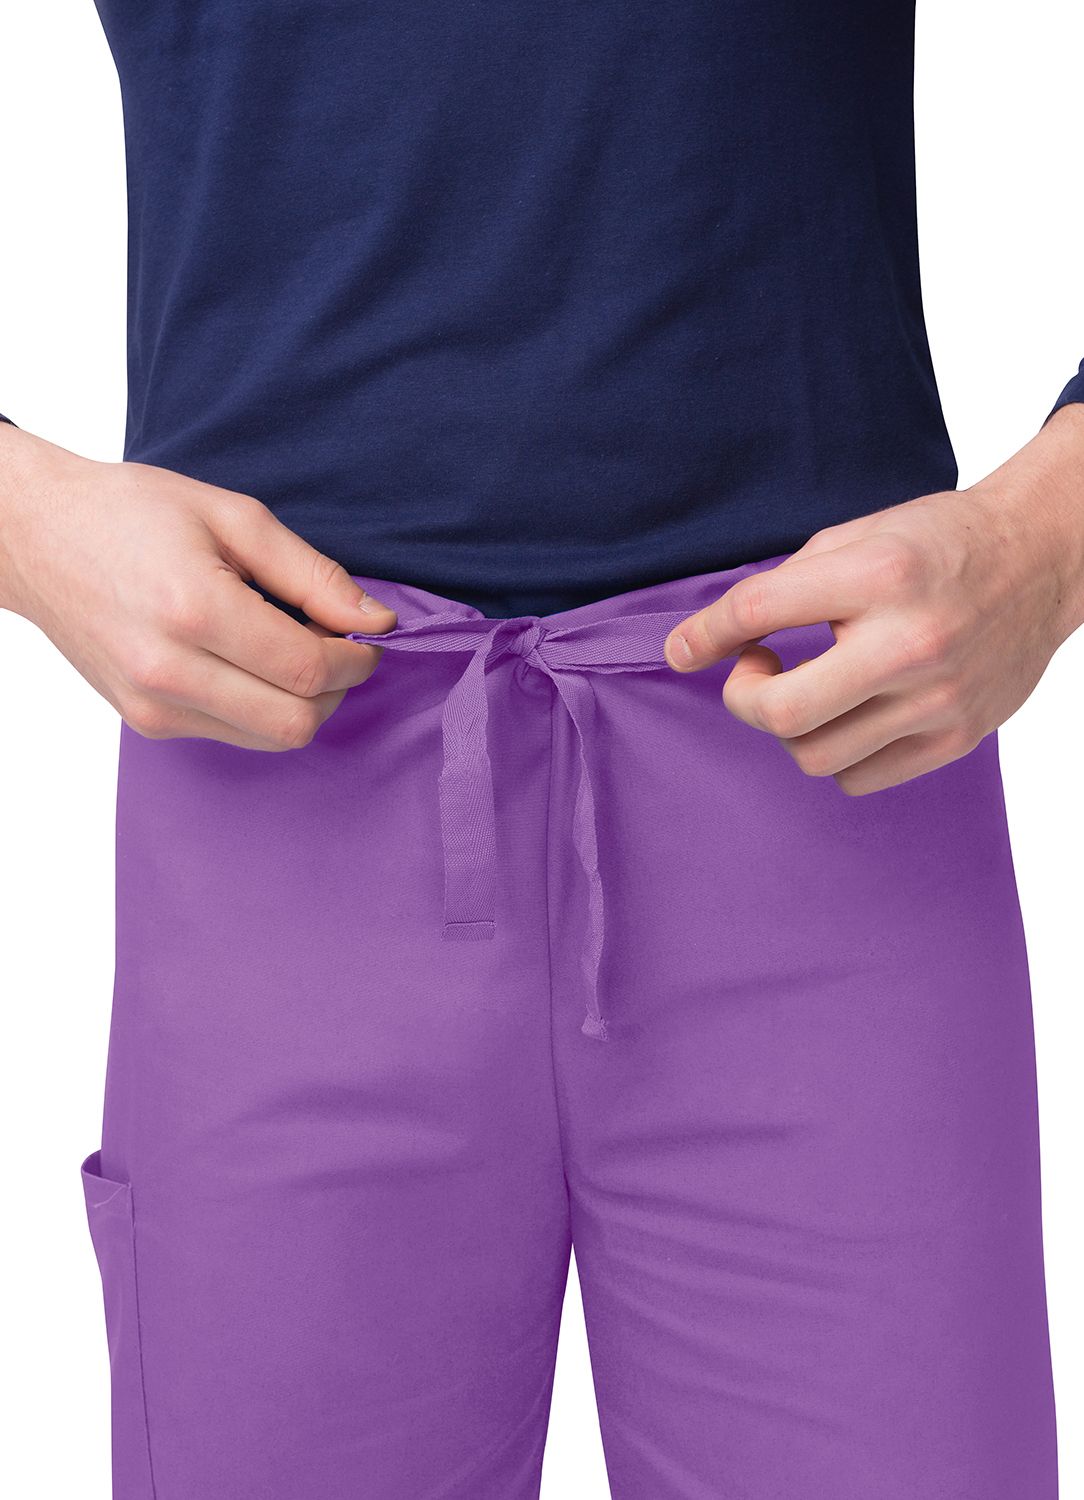 Unisex Drawstring Pants by Adar XS-5X / Lavender